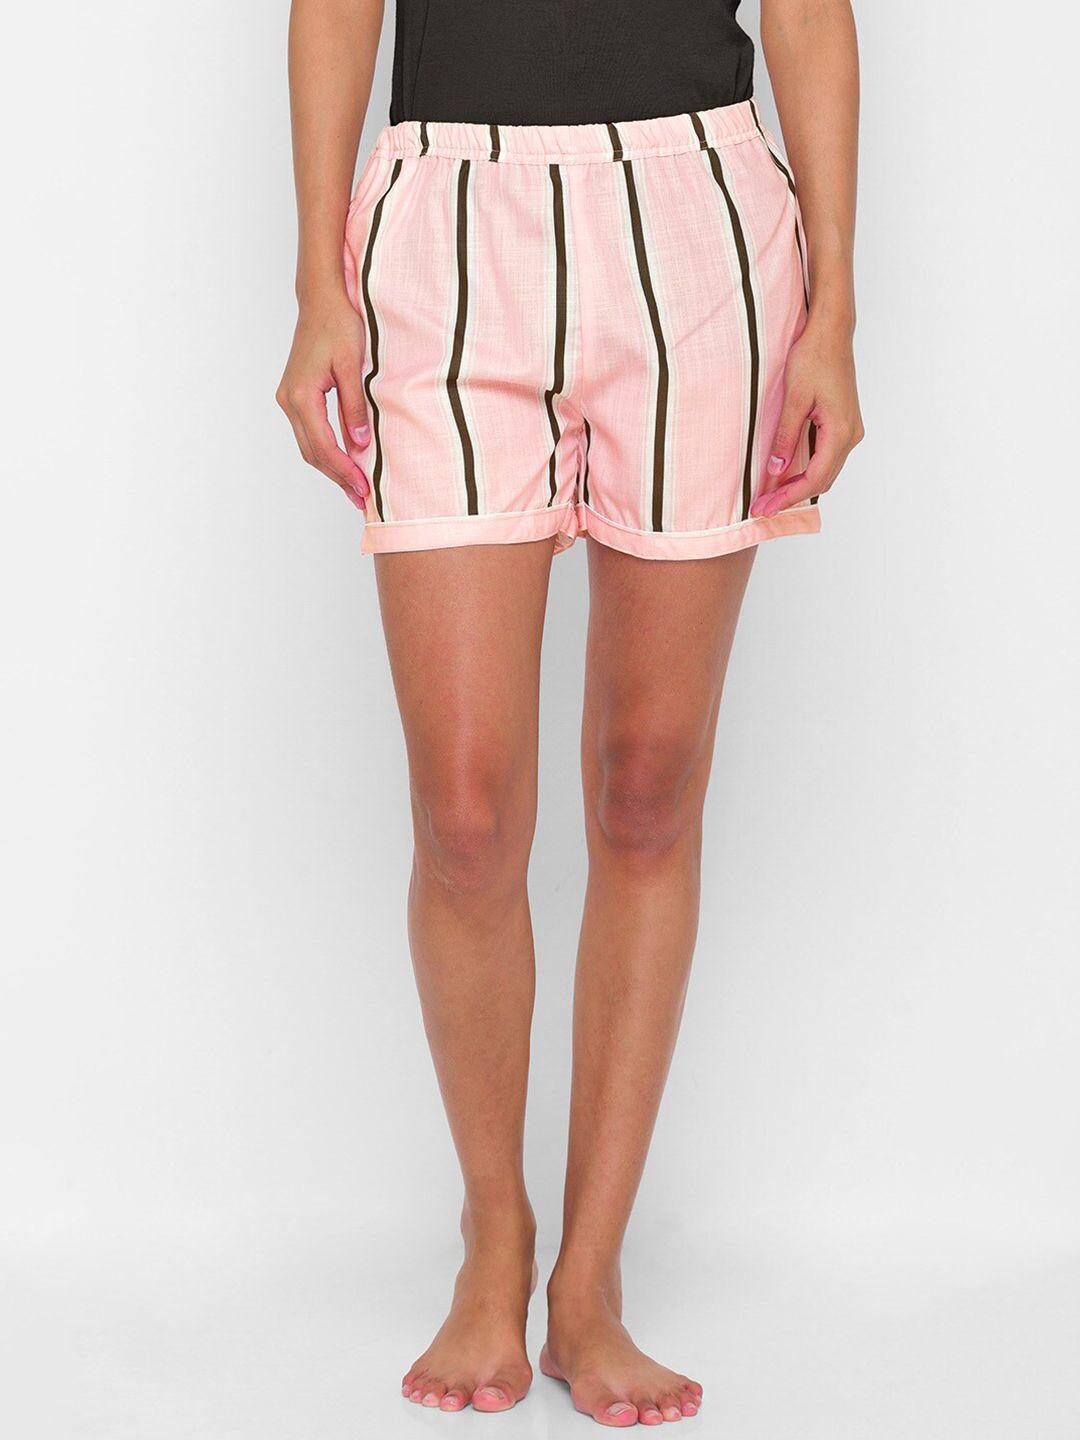 fashionrack-women-pink-&-black-striped-lounge-shorts